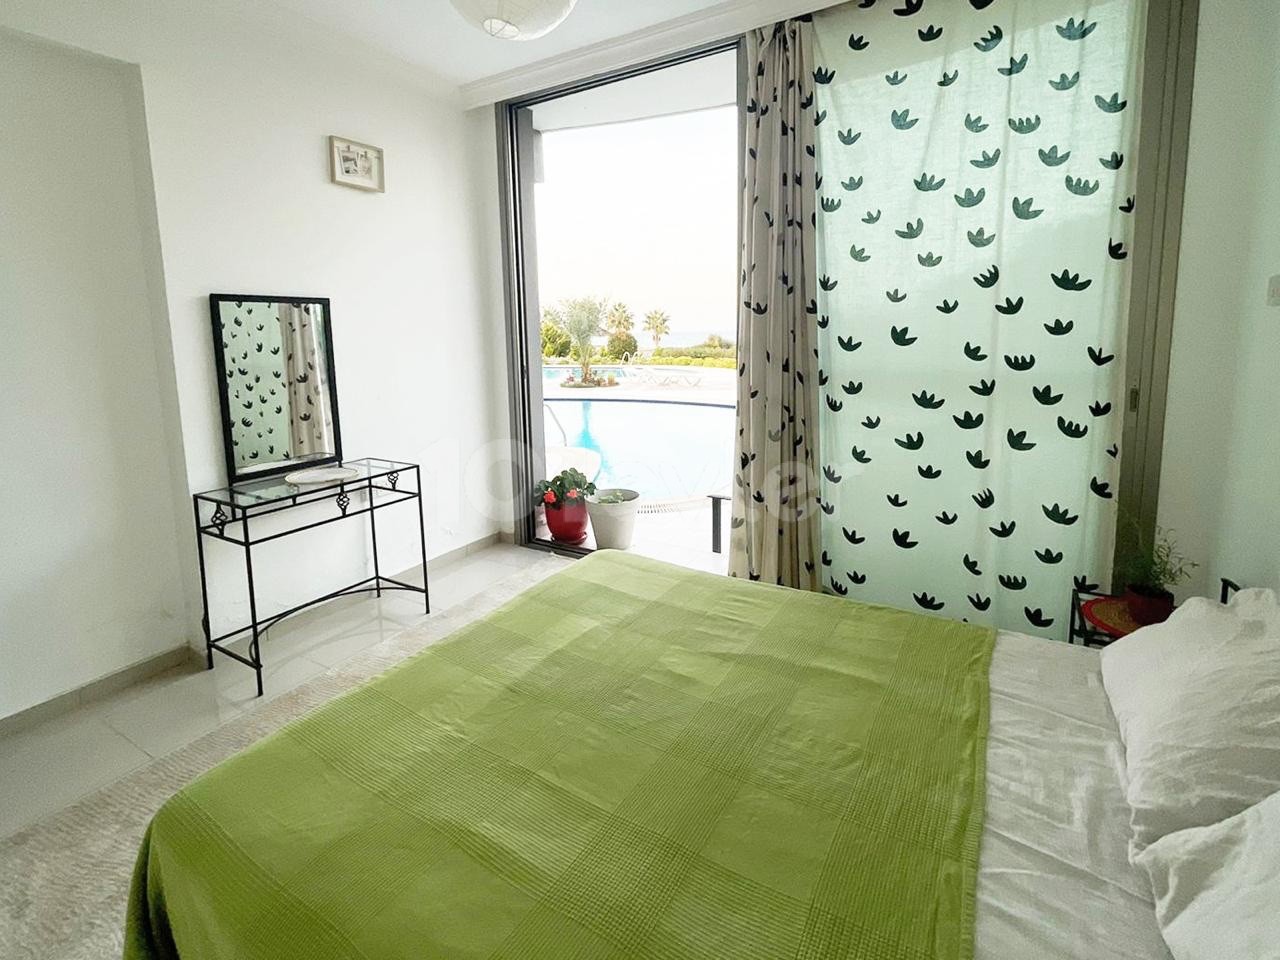 3+1 luxury flat for rent in Kyrenia Edremit area